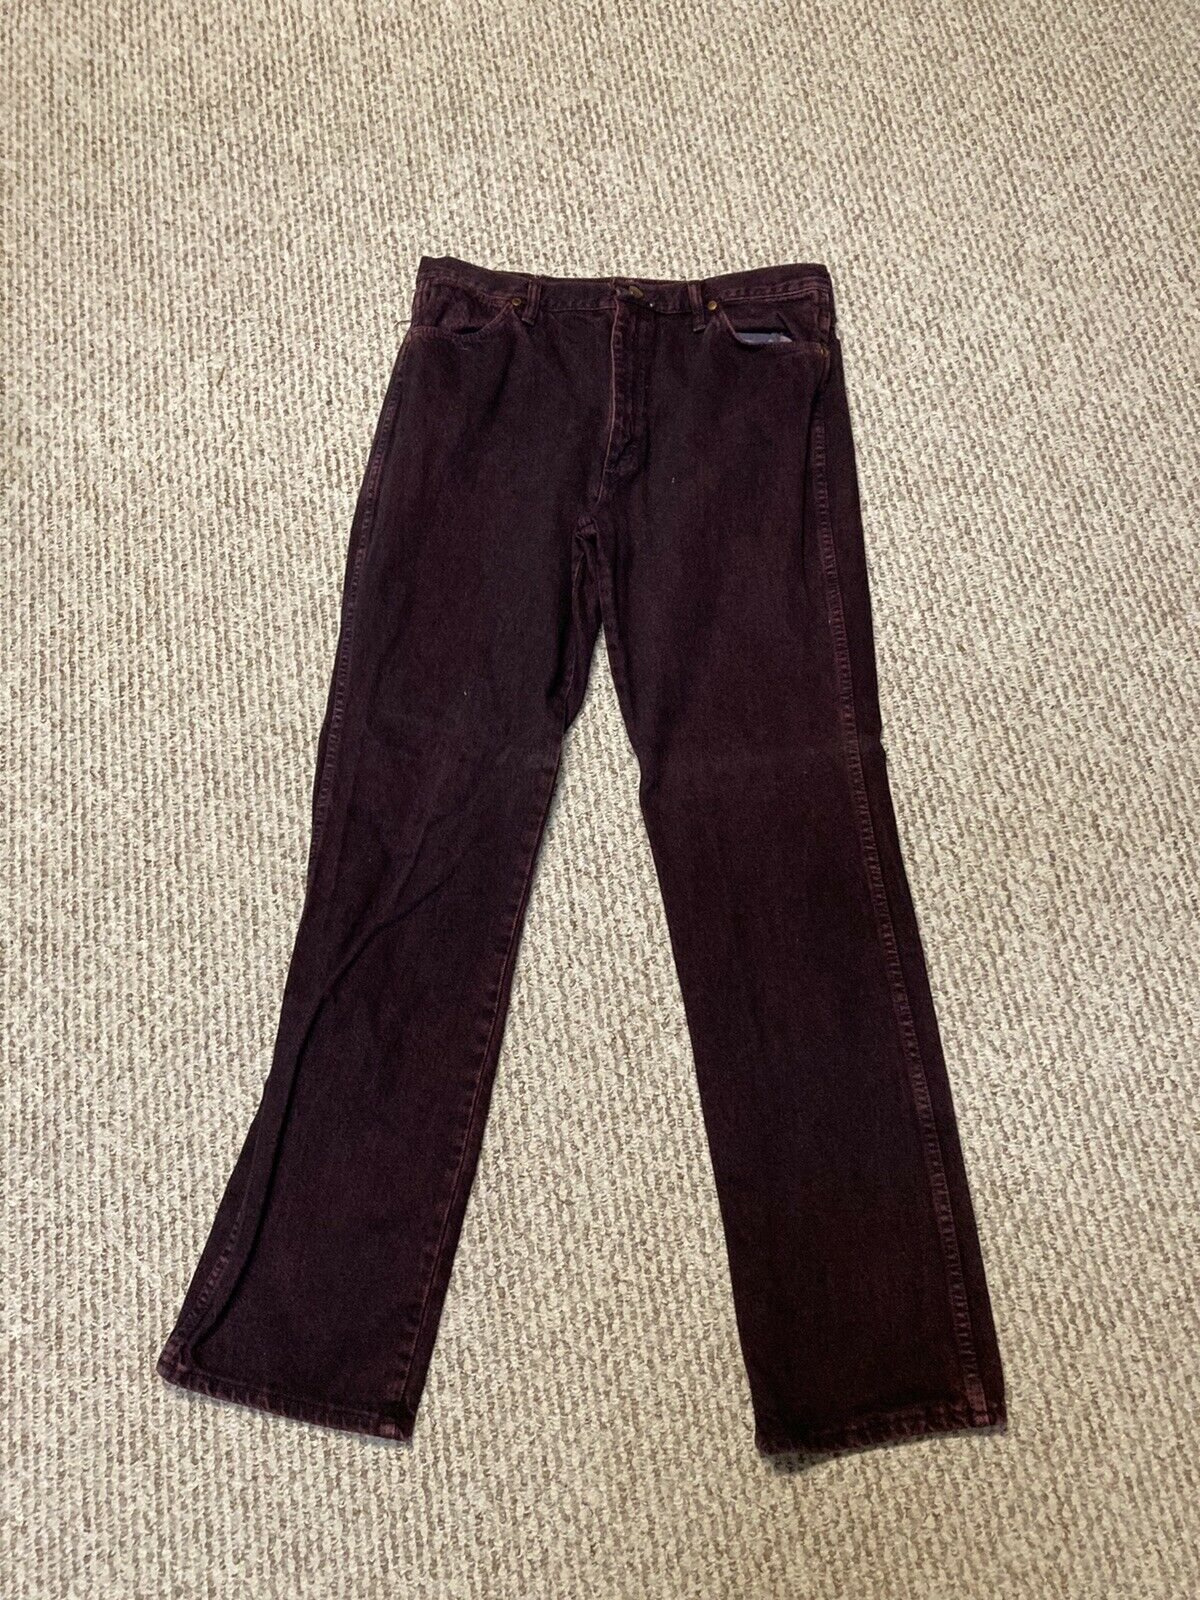 Vintage 90s Wrangler Burgundy Red Pants Retro Acid Wash 36x34